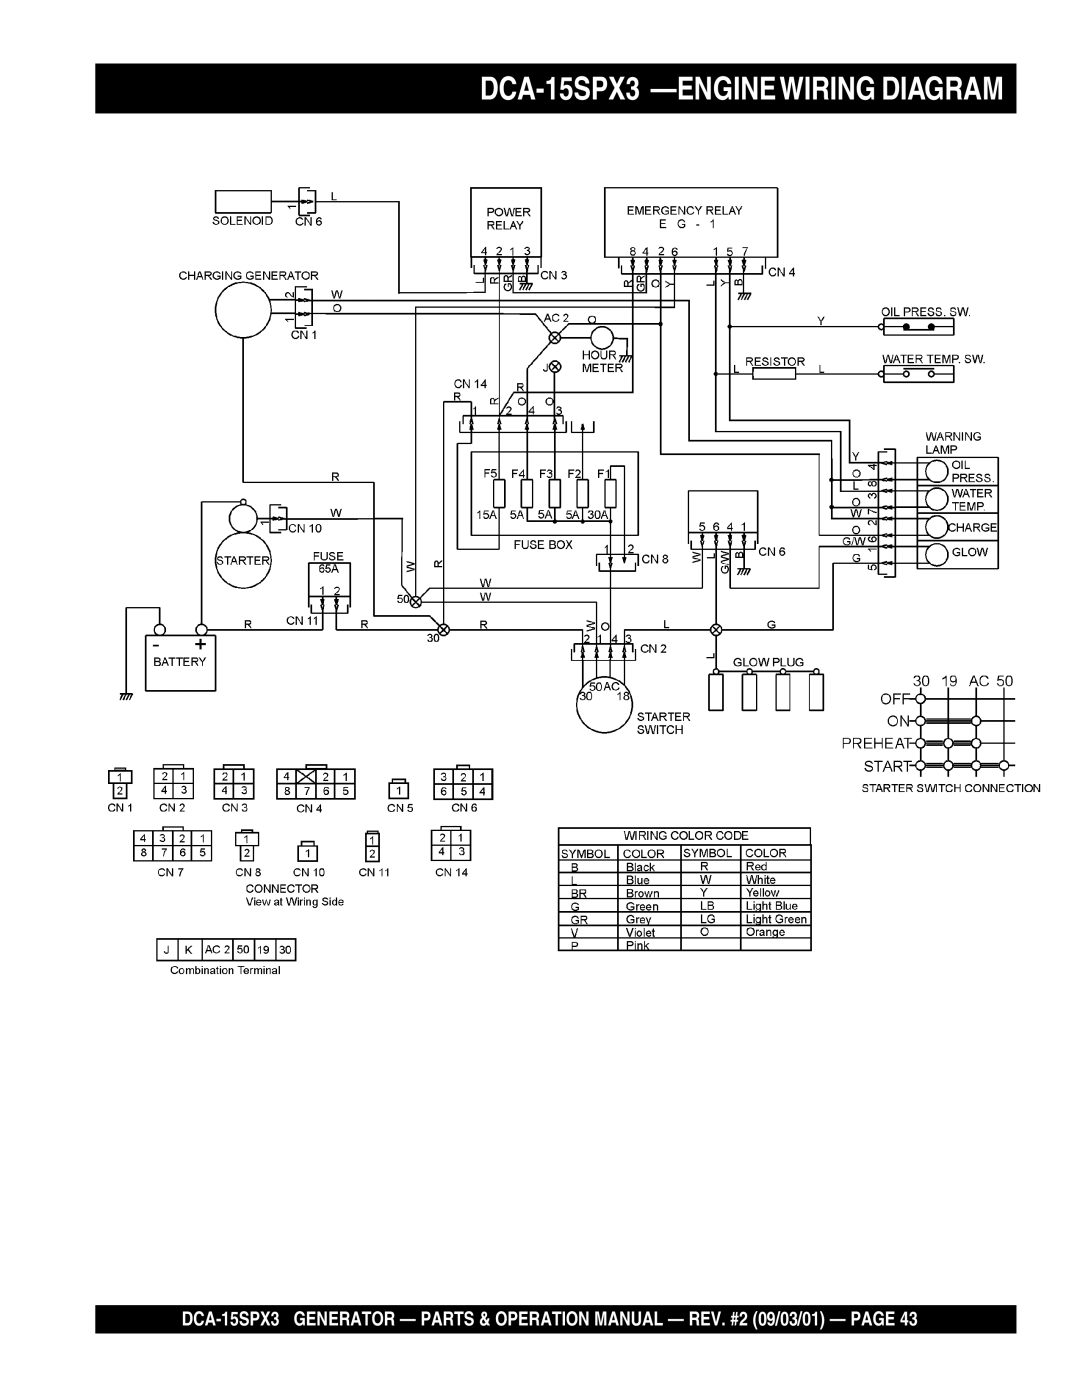 Multiquip operation manual DCA-15SPX3 —ENGINEWIRINGDIAGRAM 